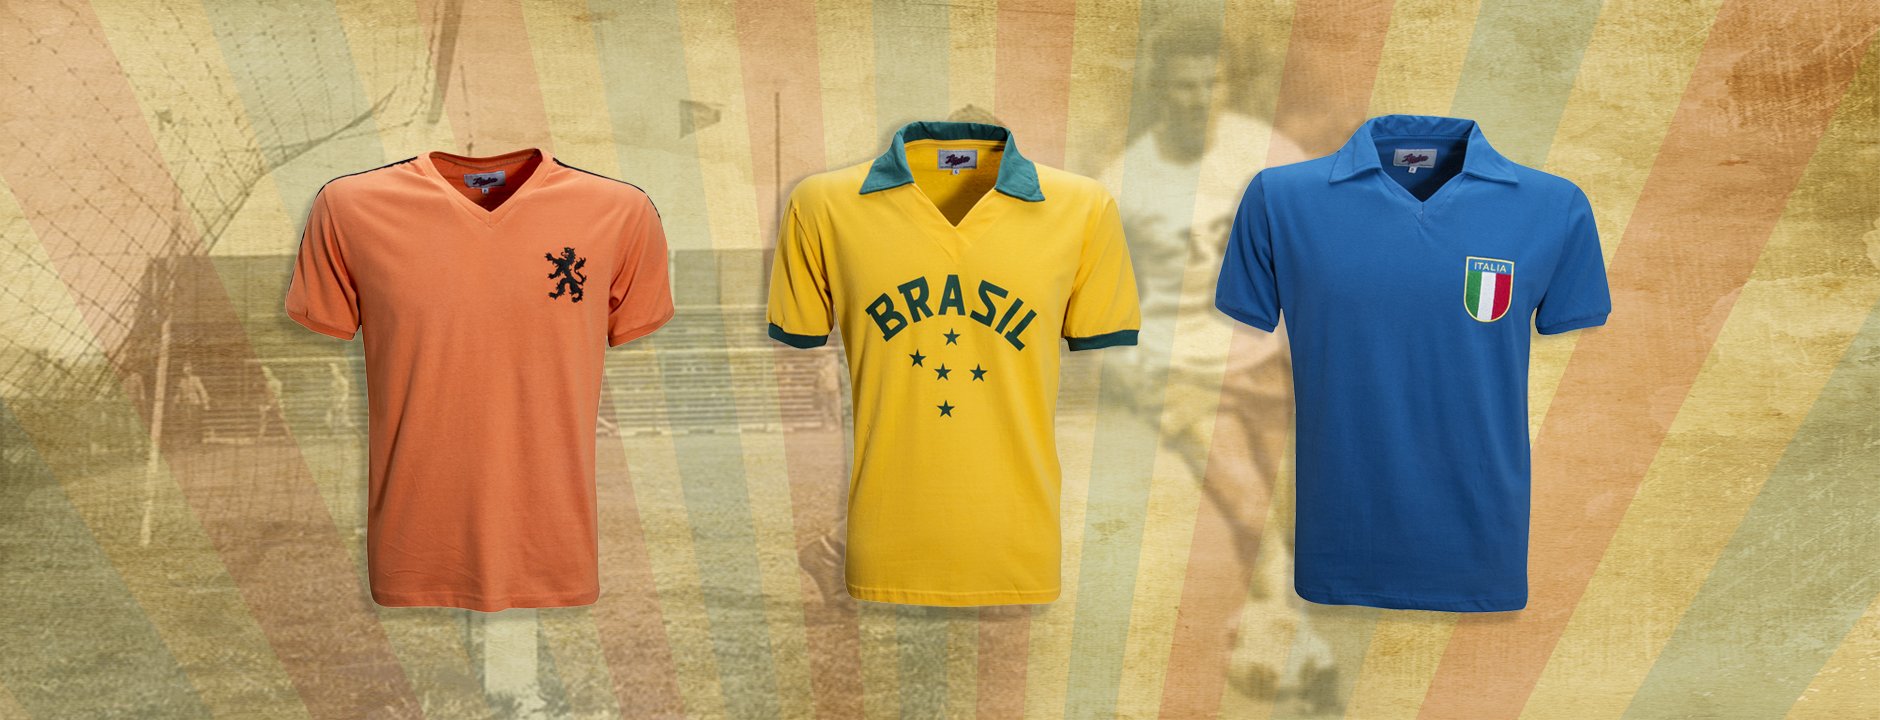 vintage sports jerseys retro